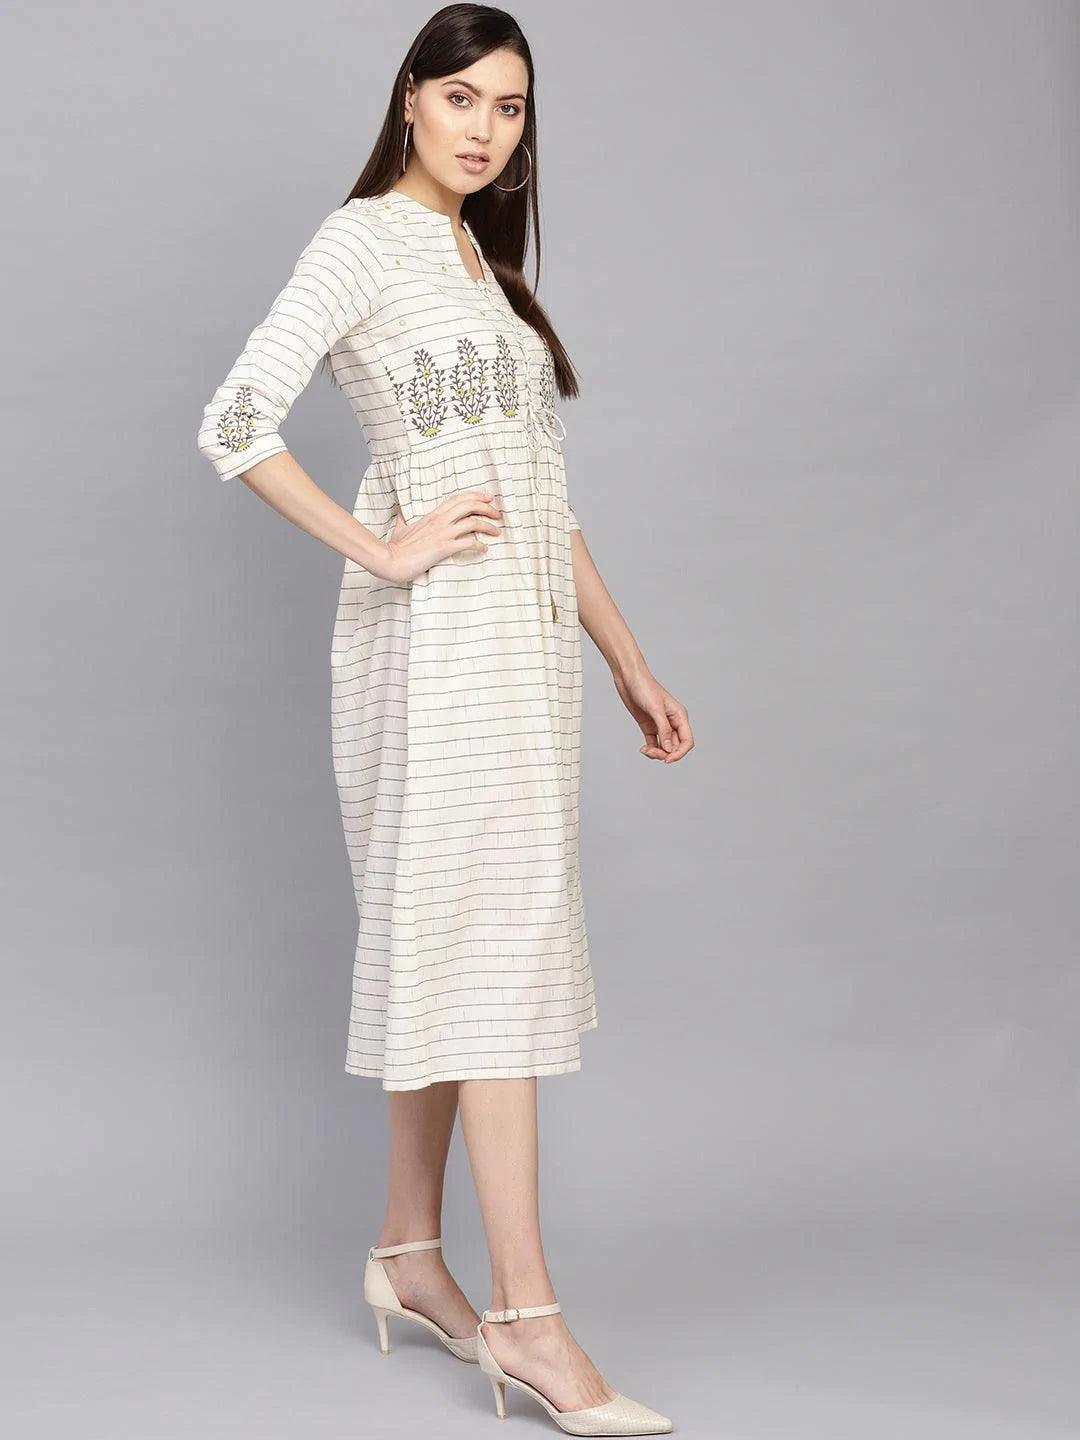 White Printed Cotton Dress - ShopLibas